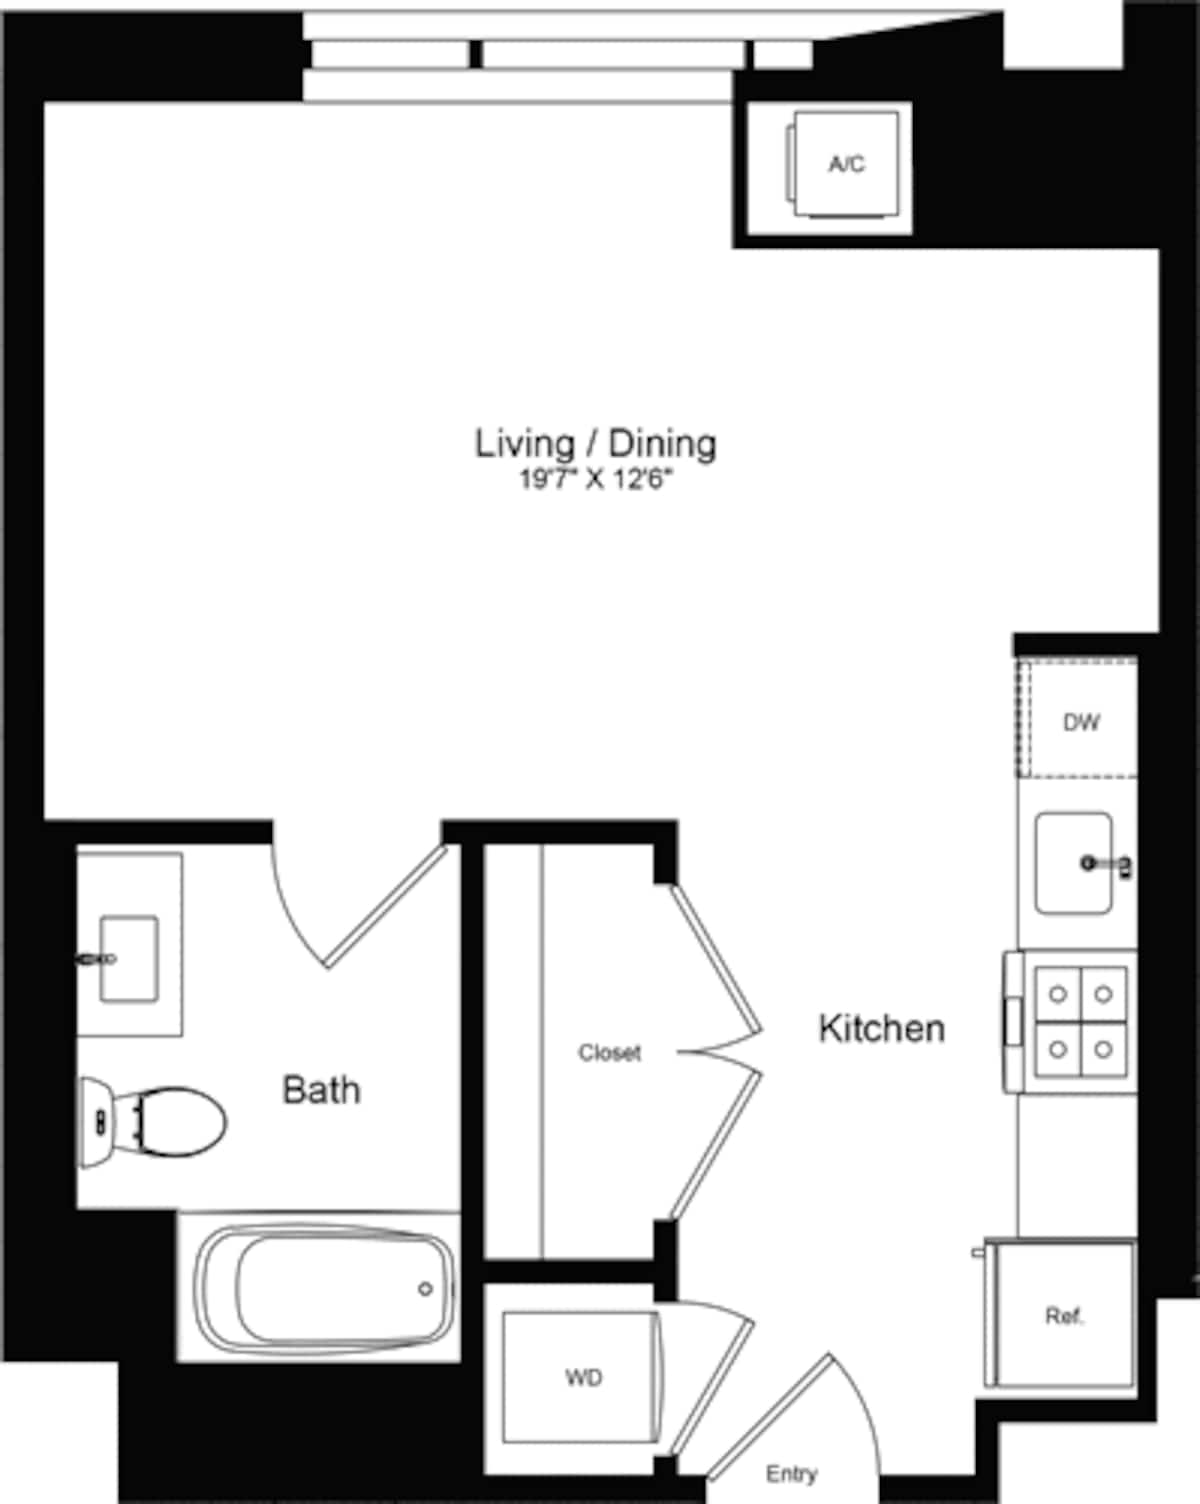 Floorplan diagram for Studio N, showing Studio